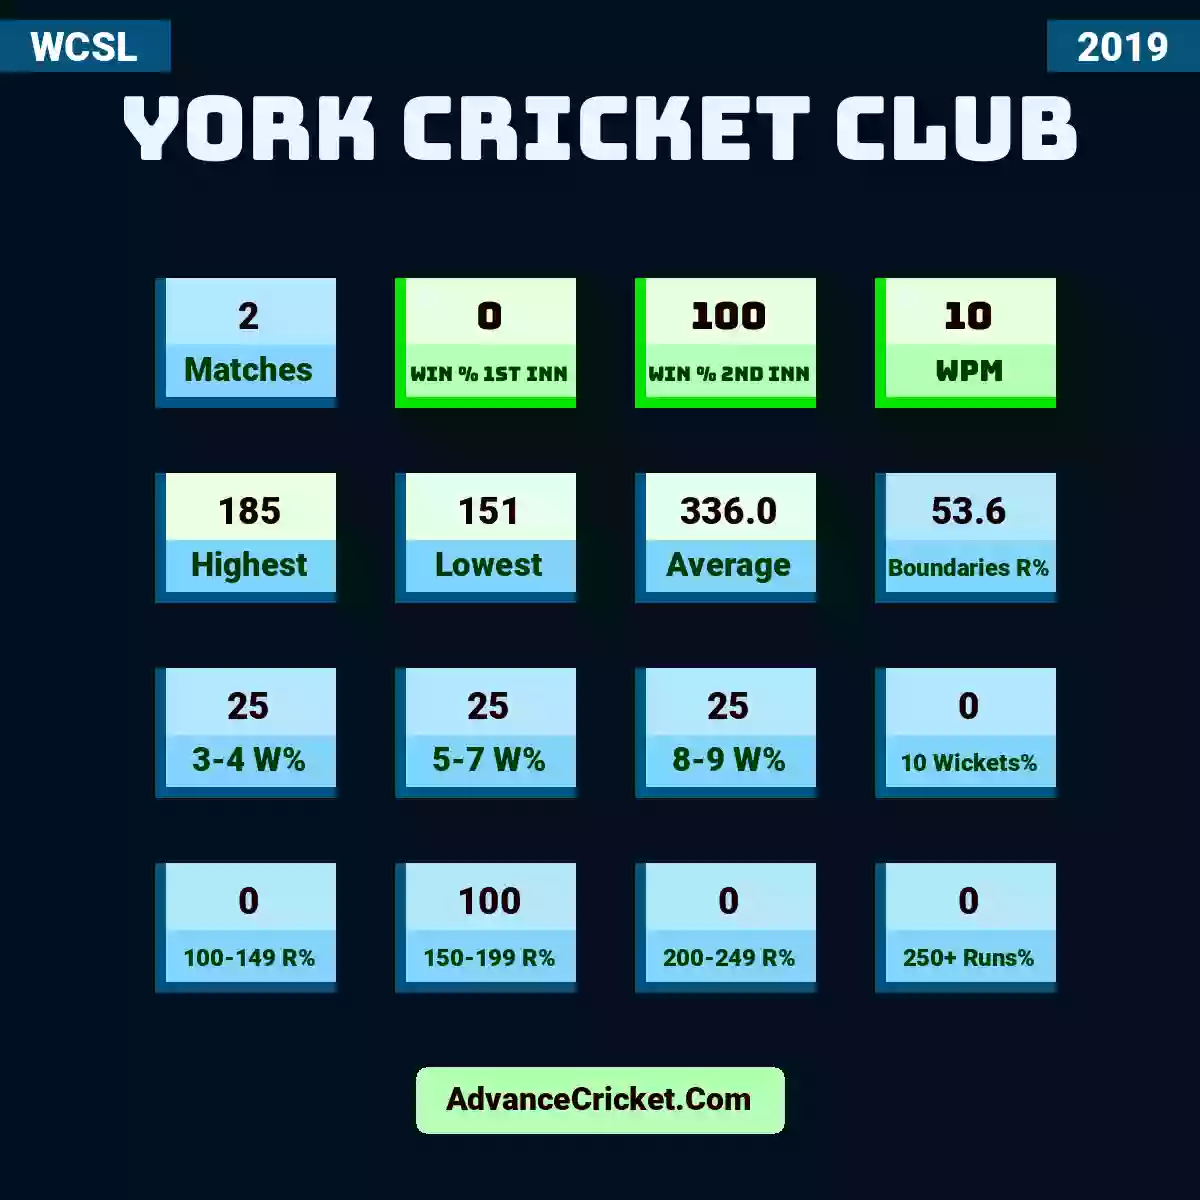 Image showing York Cricket Club with Matches: 2, Win % 1st Inn: 0, Win % 2nd Inn: 100, WPM: 10, Highest: 185, Lowest: 151, Average: 336.0, Boundaries R%: 53.6, 3-4 W%: 25, 5-7 W%: 25, 8-9 W%: 25, 10 Wickets%: 0, 100-149 R%: 0, 150-199 R%: 100, 200-249 R%: 0, 250+ Runs%: 0.